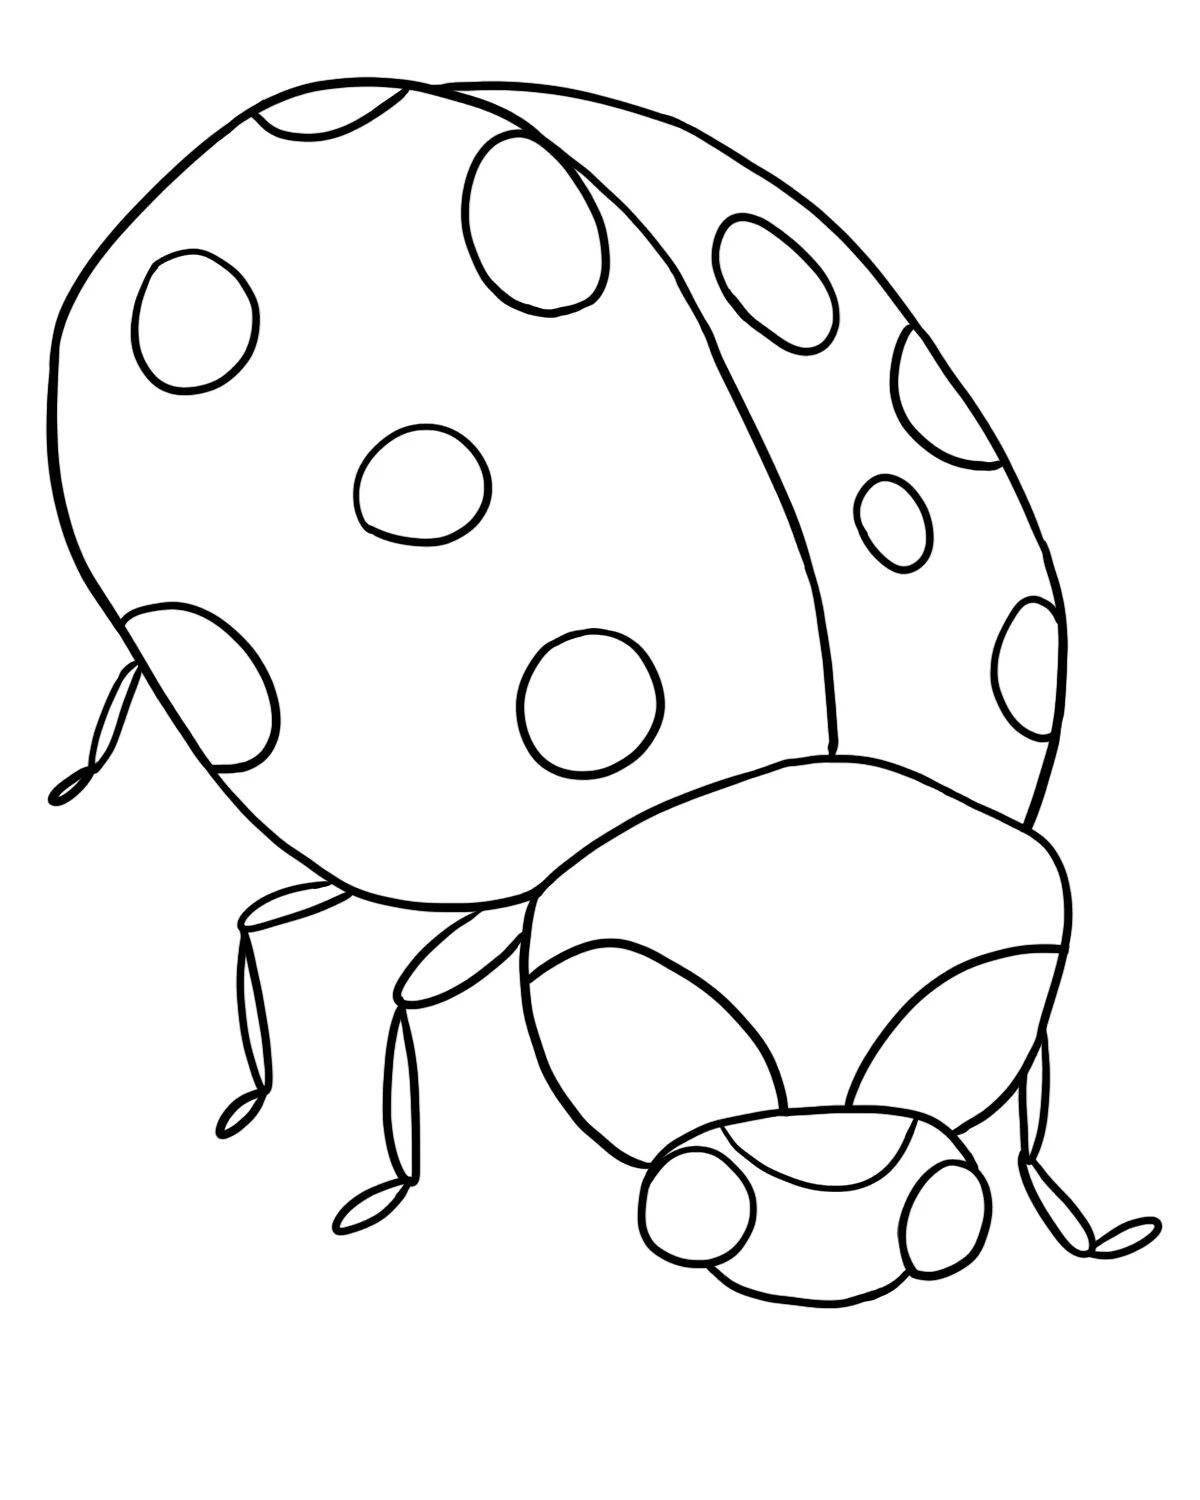 Dazzling drawing of a ladybug